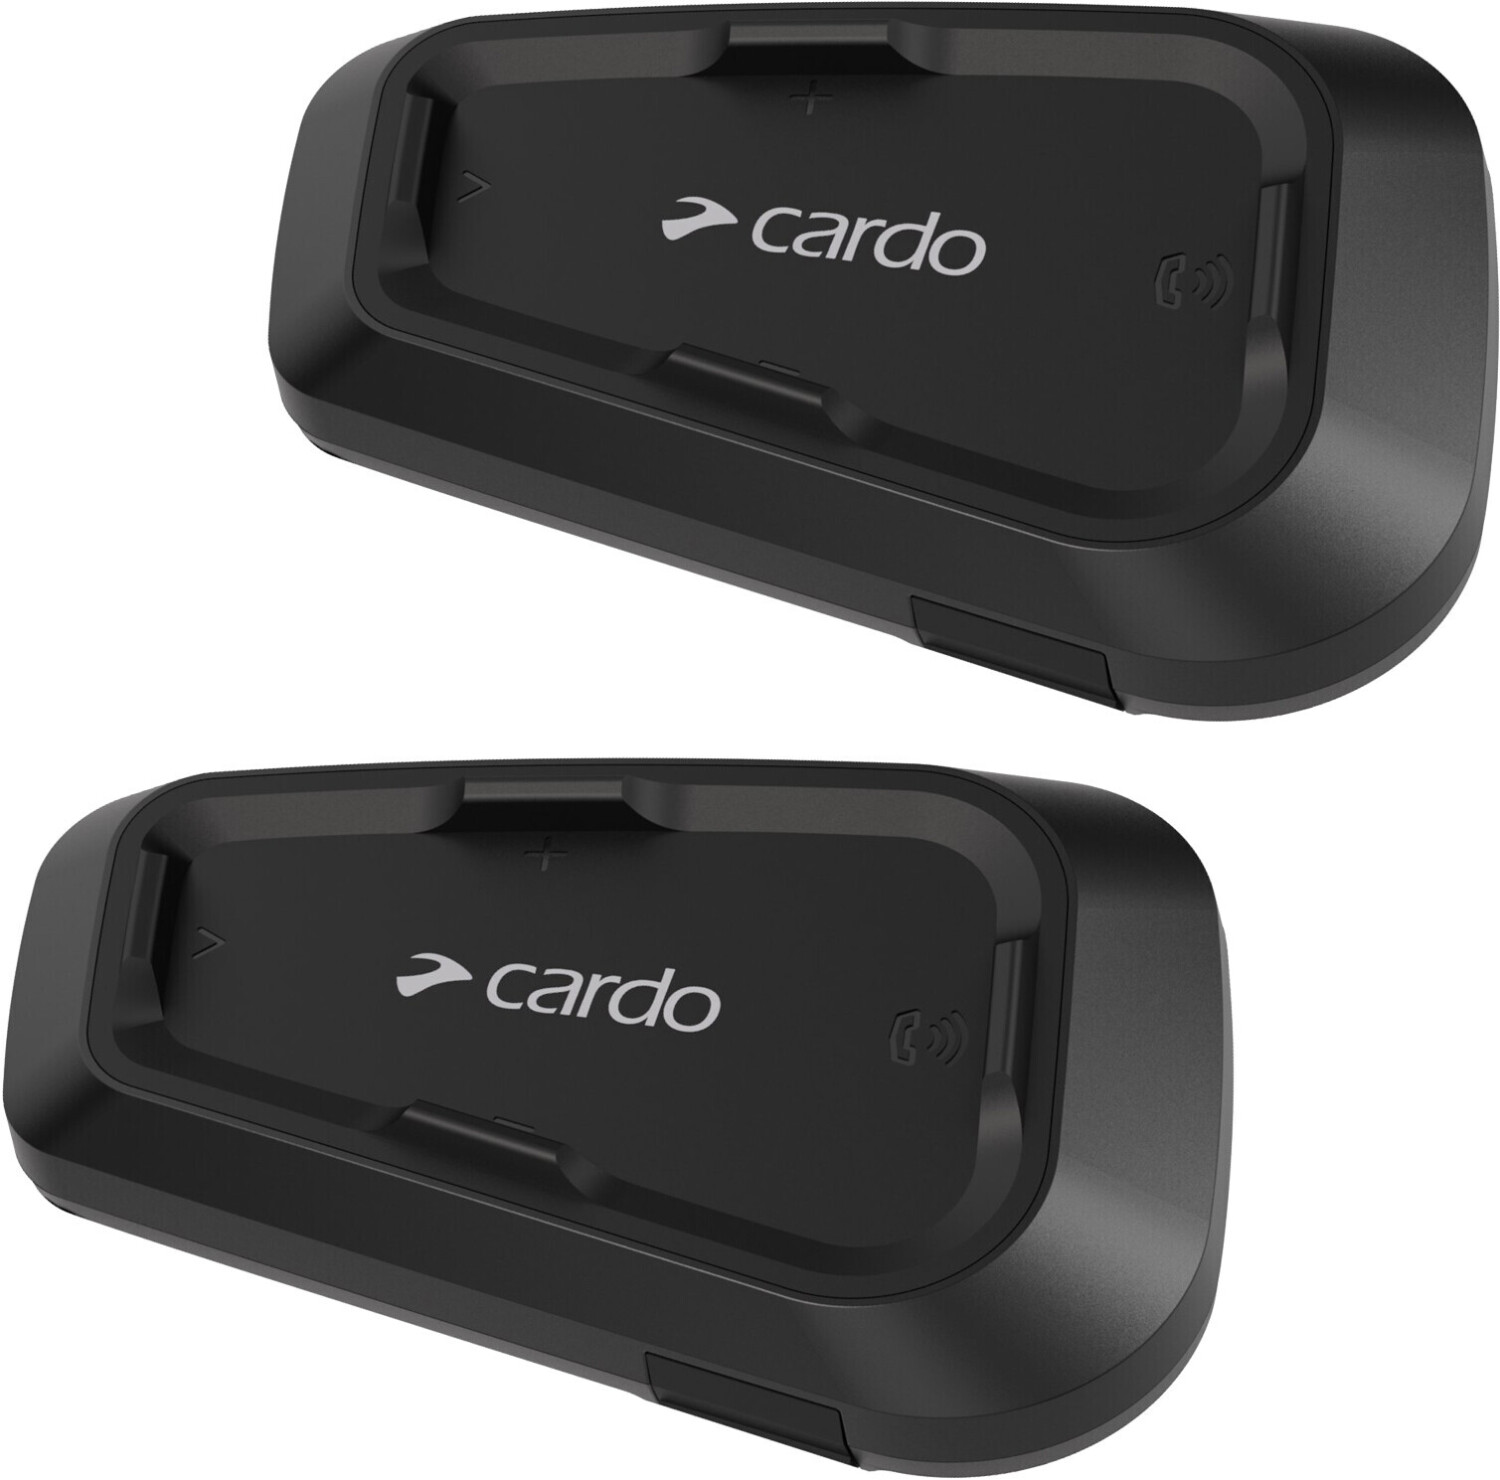 Cardo Spirit HD Solo Intercom SPRT002, FREE UK DELIVERY, Flexible Ways To  Pay